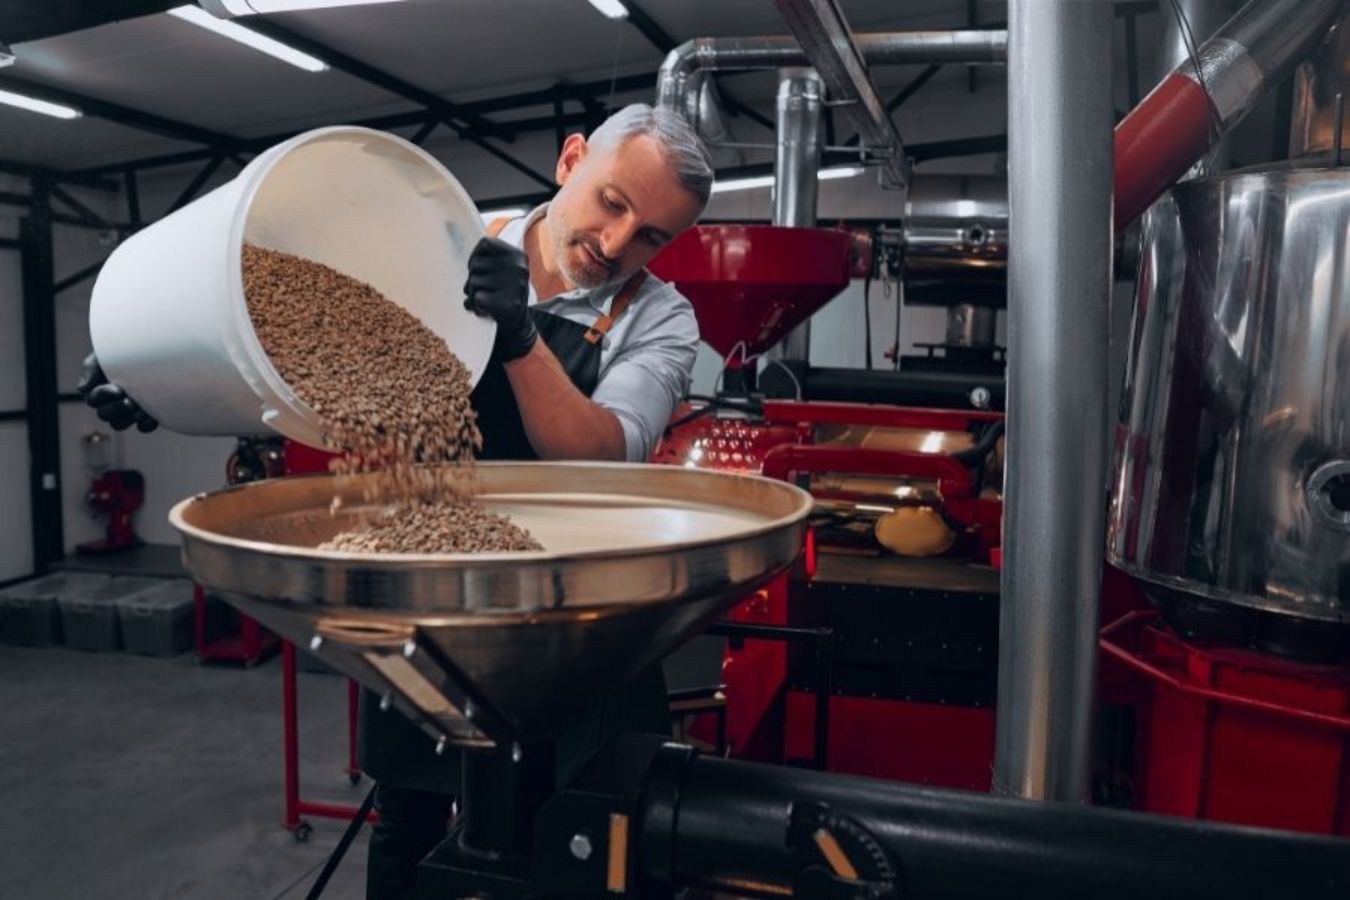 Environmental Impact On Coffee Roasting